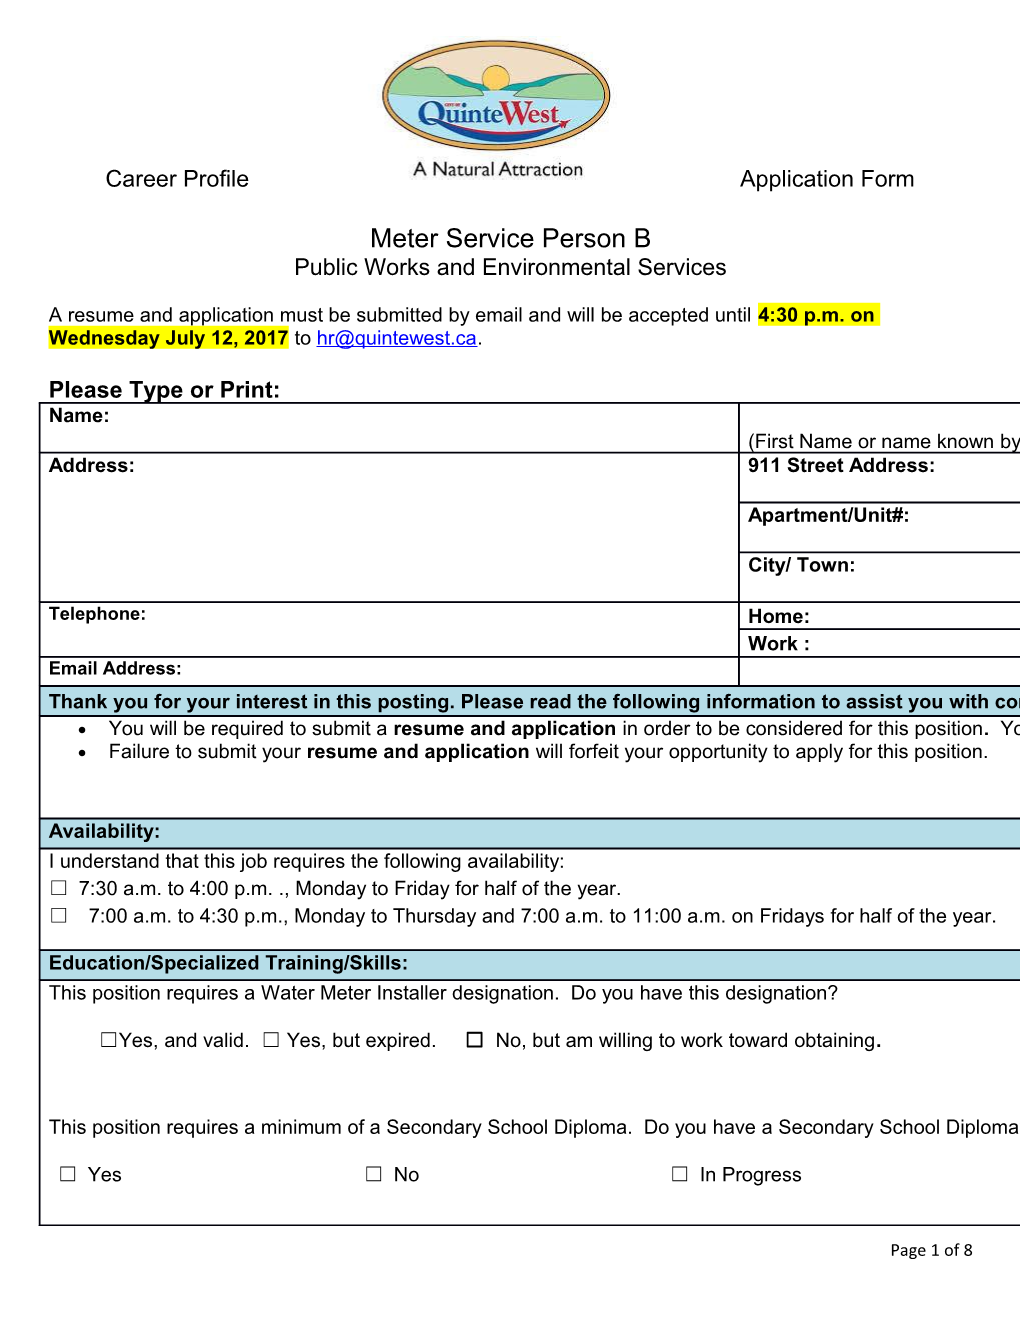 Career Profile Application Form